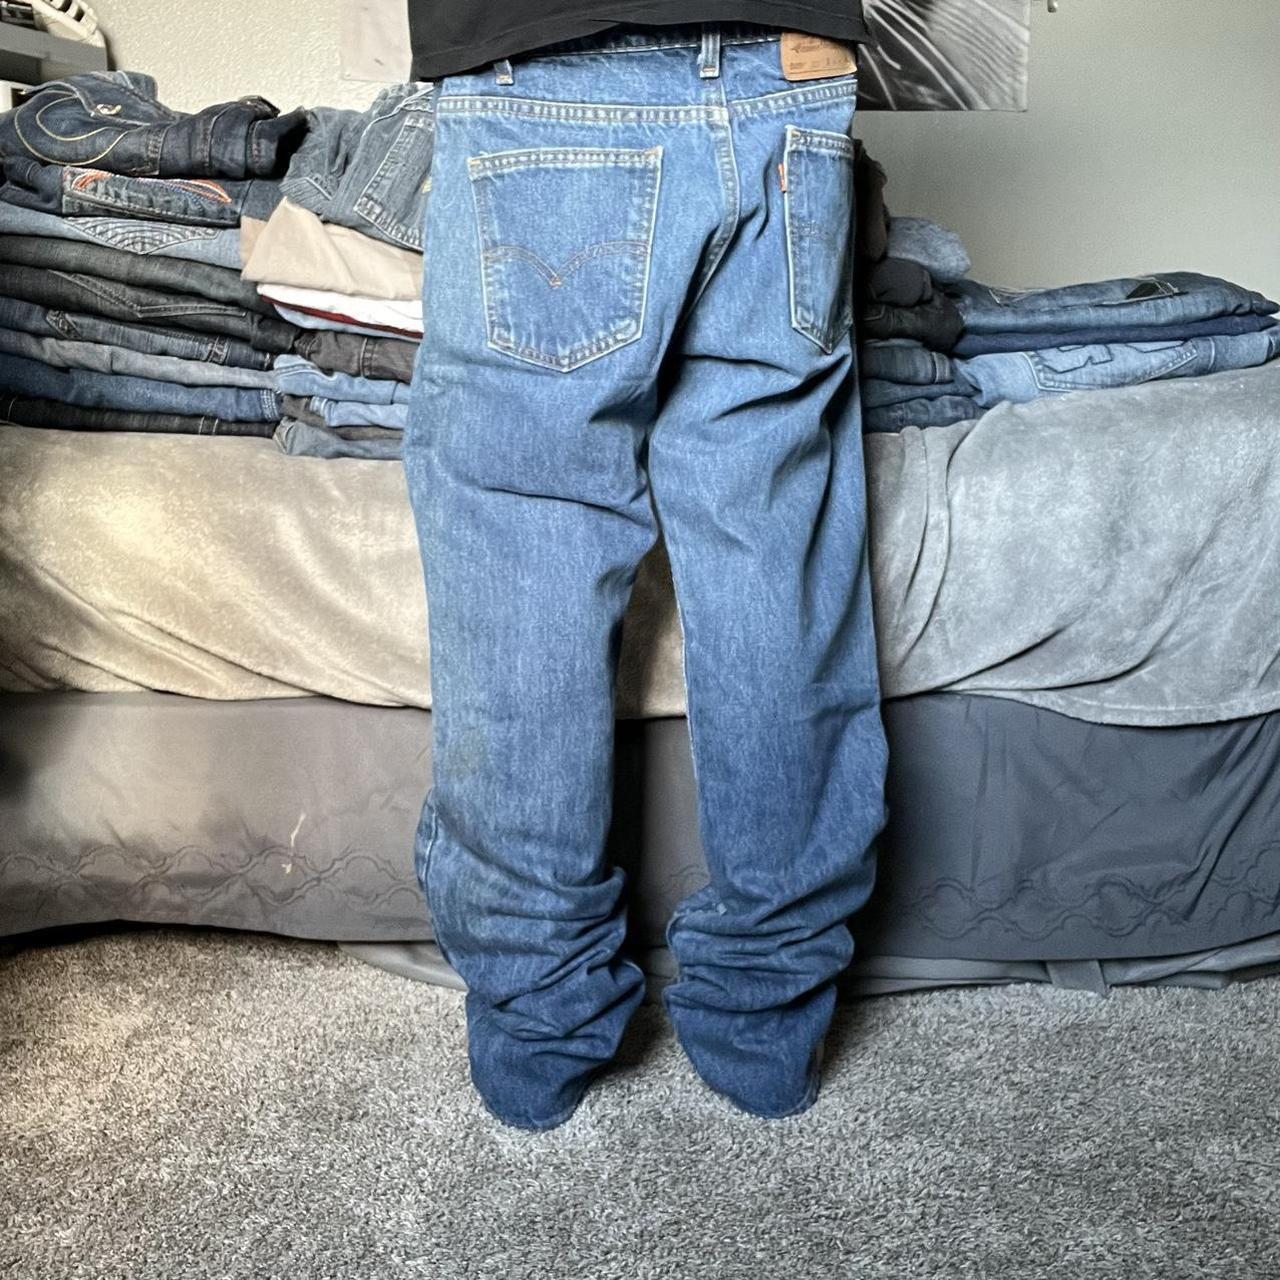 Insane pair of vintage 90s Levi’s orange tab jeans,... - Depop